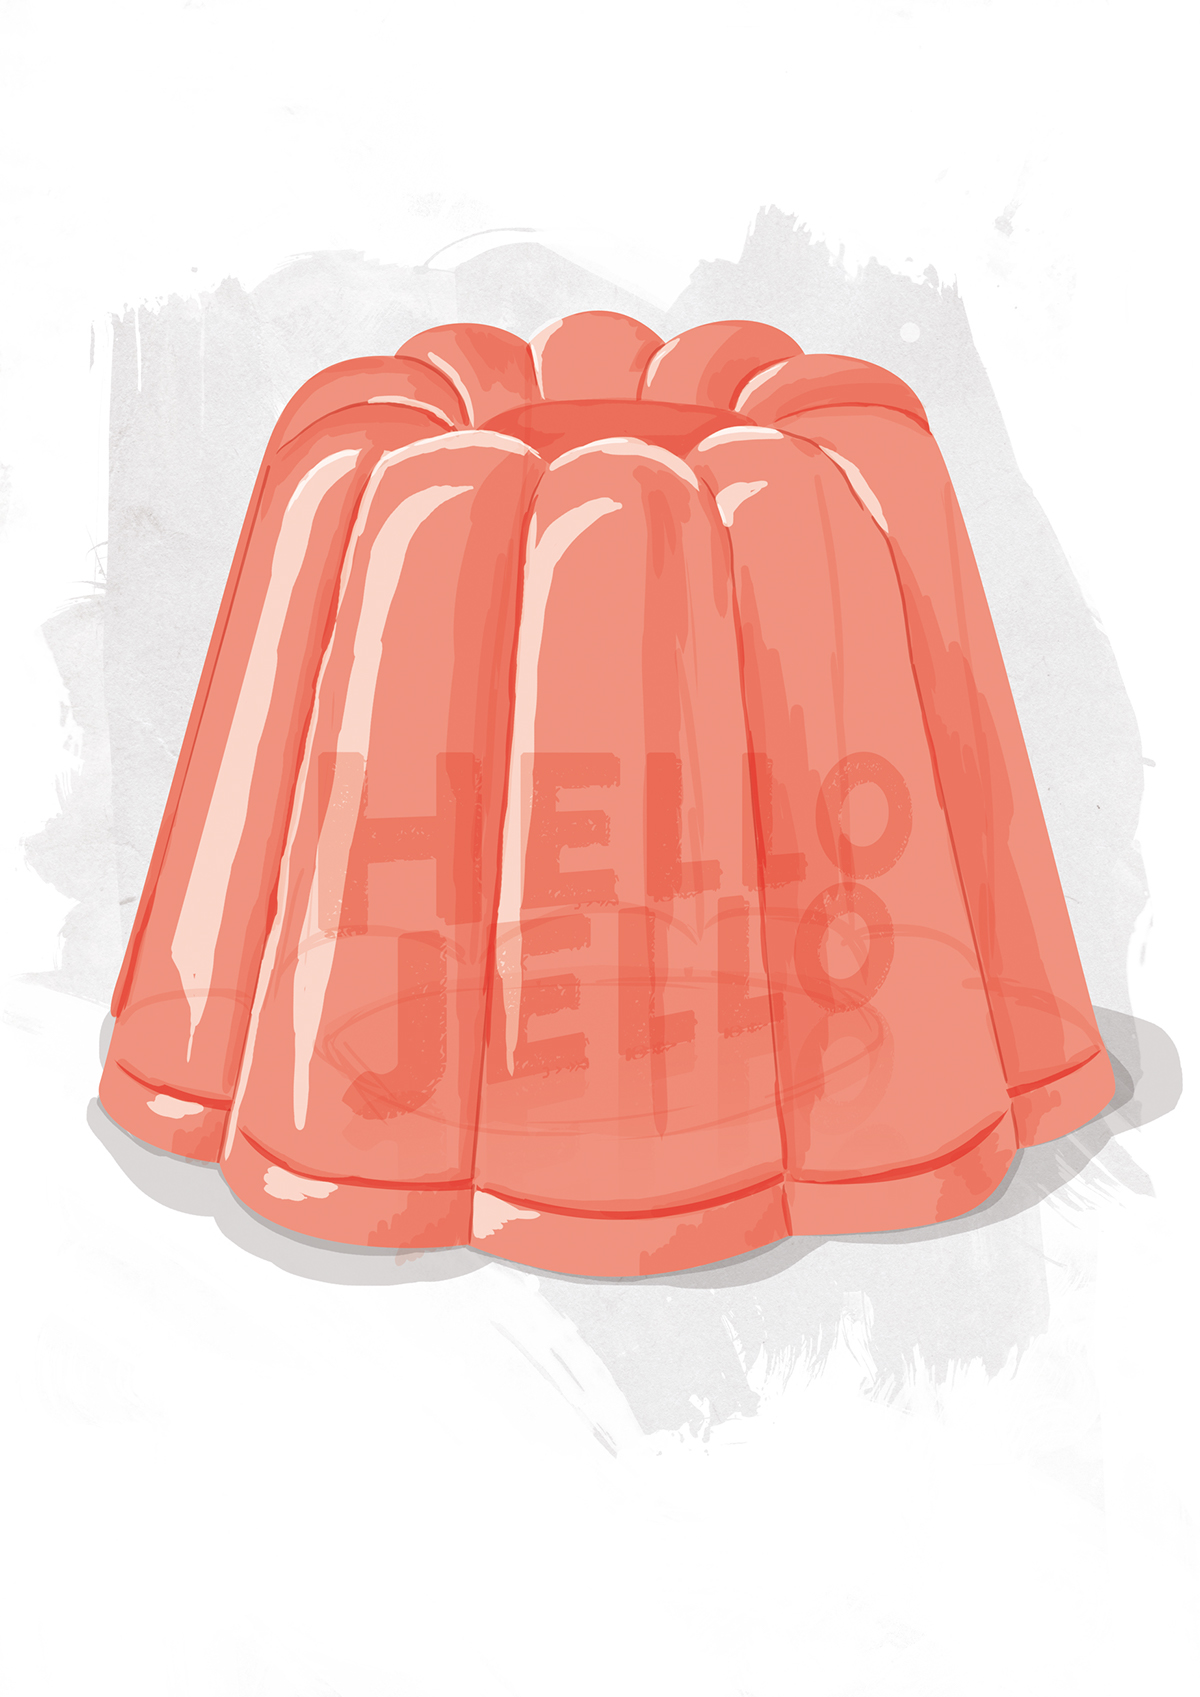 illustrations Food  jello Pudding hello